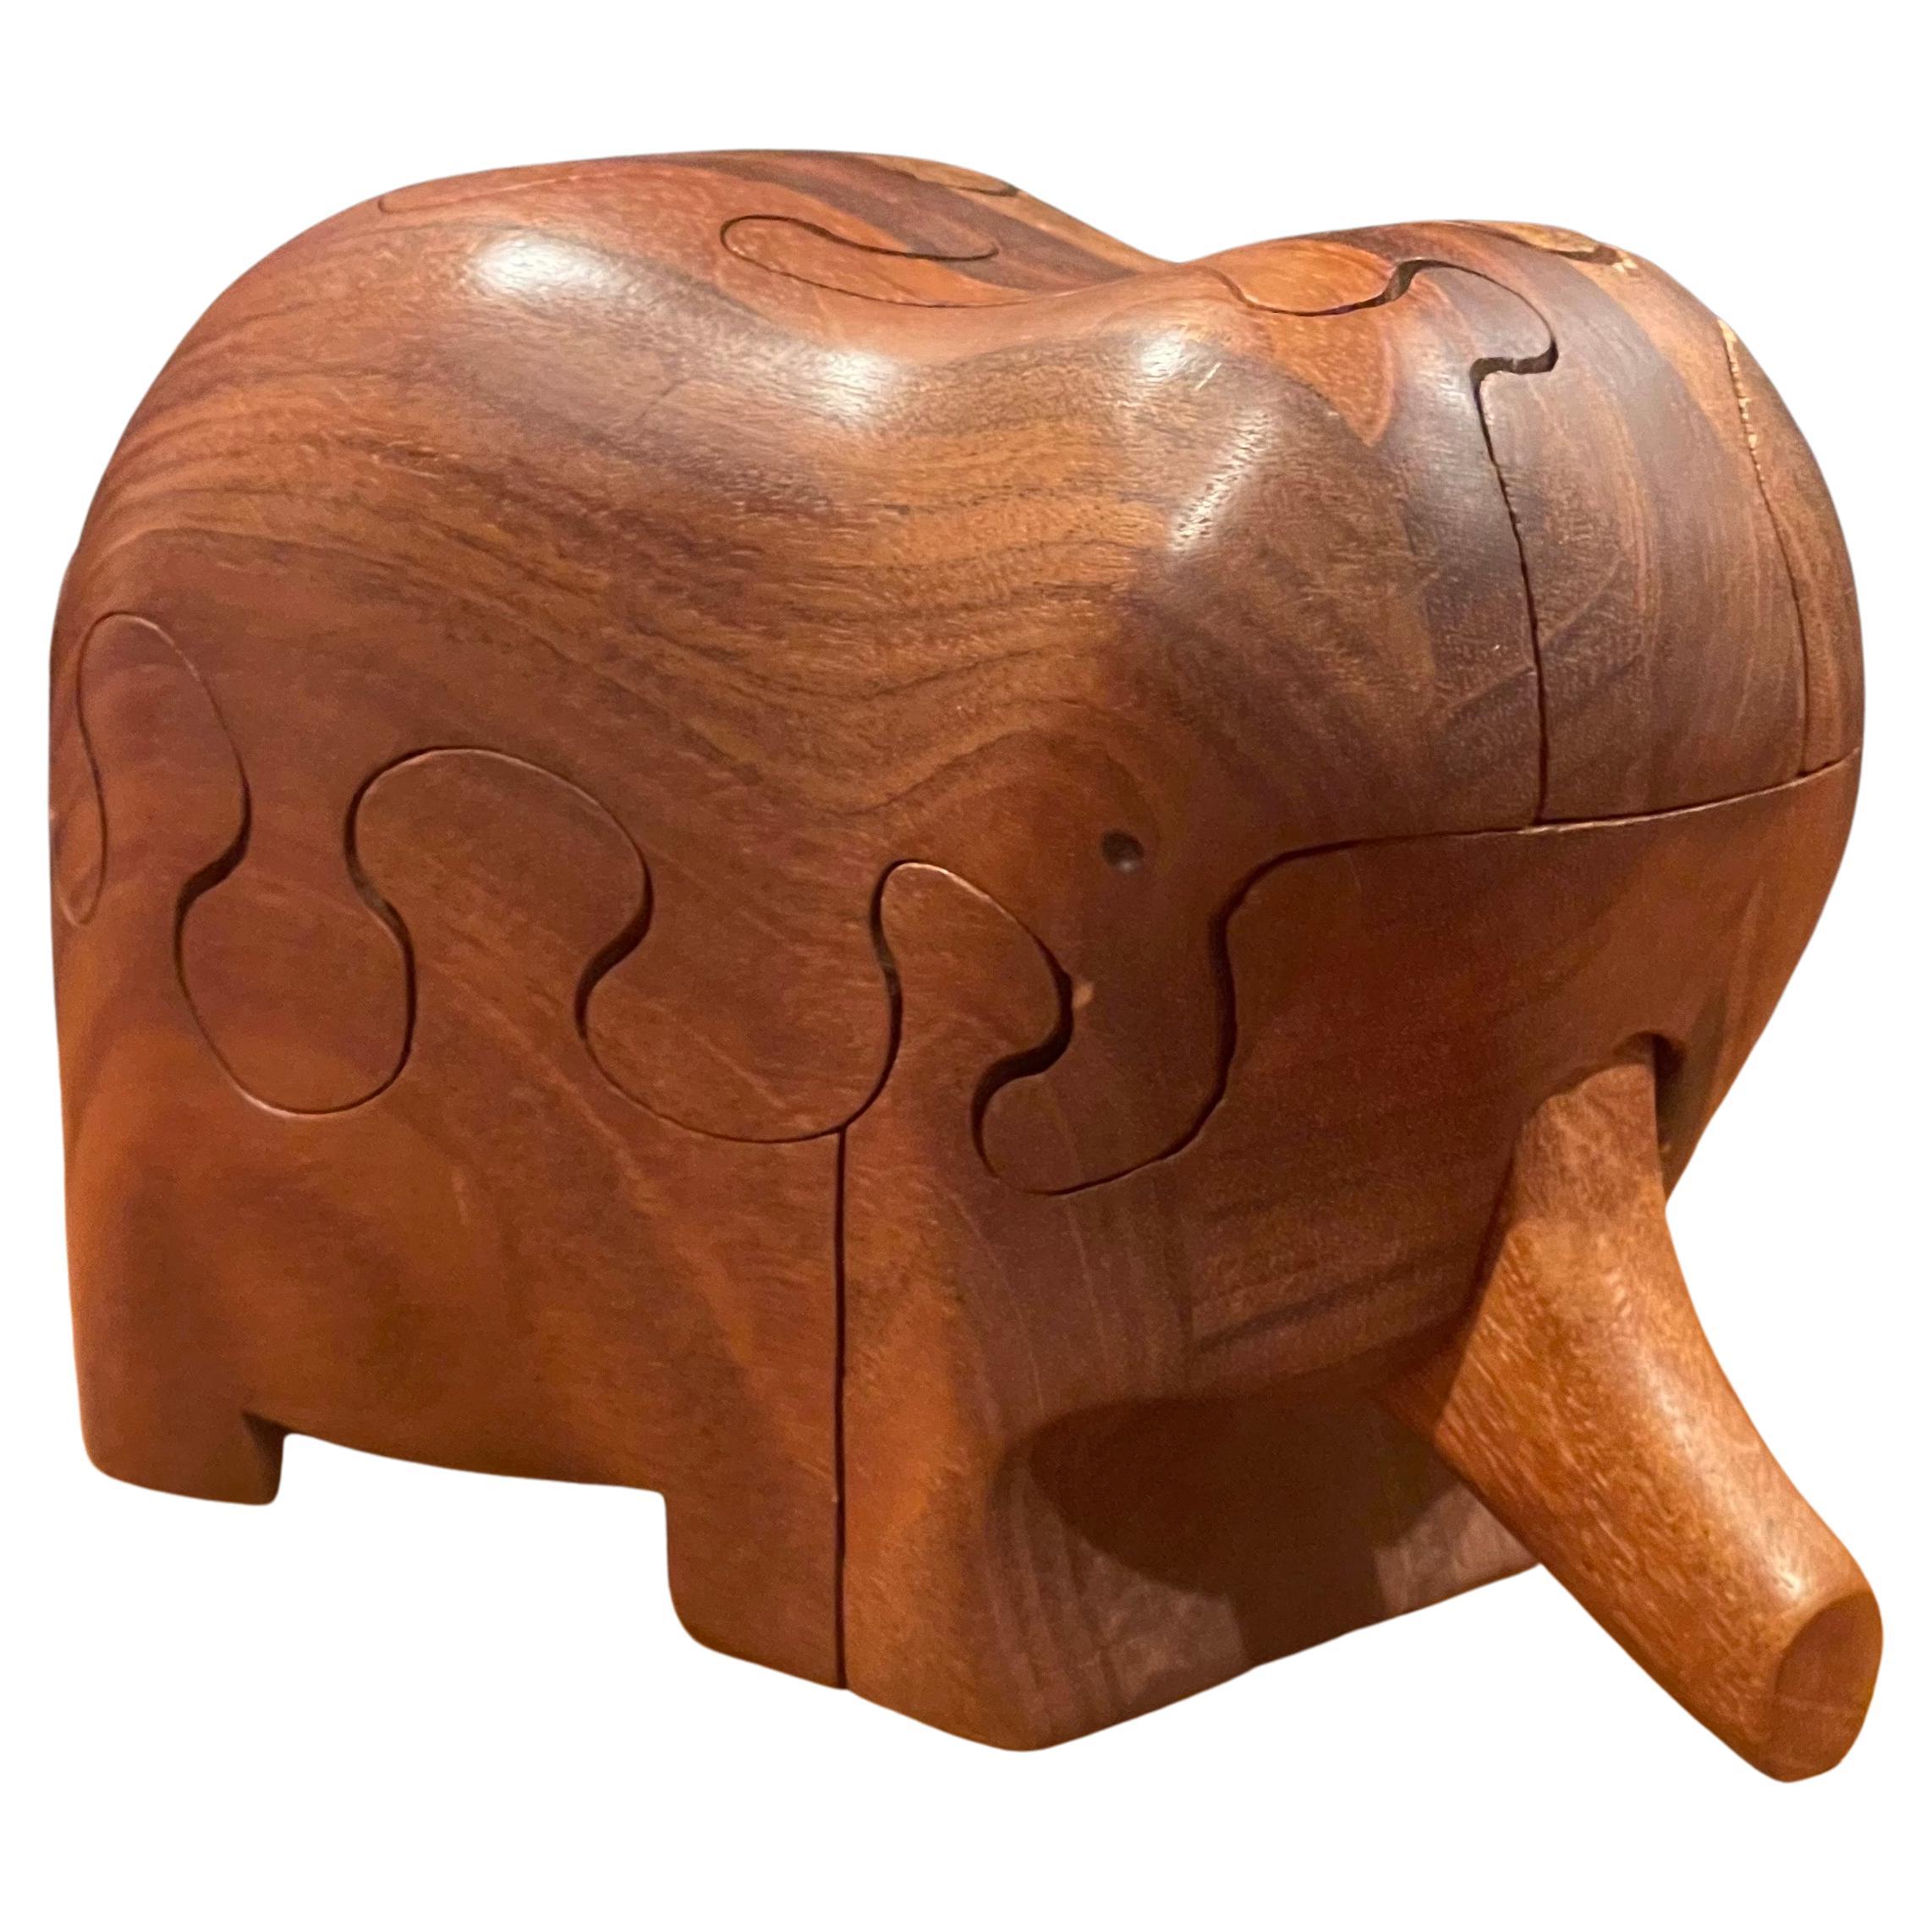 Massives figurales Elefanten- Puzzle / Skulptur aus Nussbaumholz von Deborah D. Bump